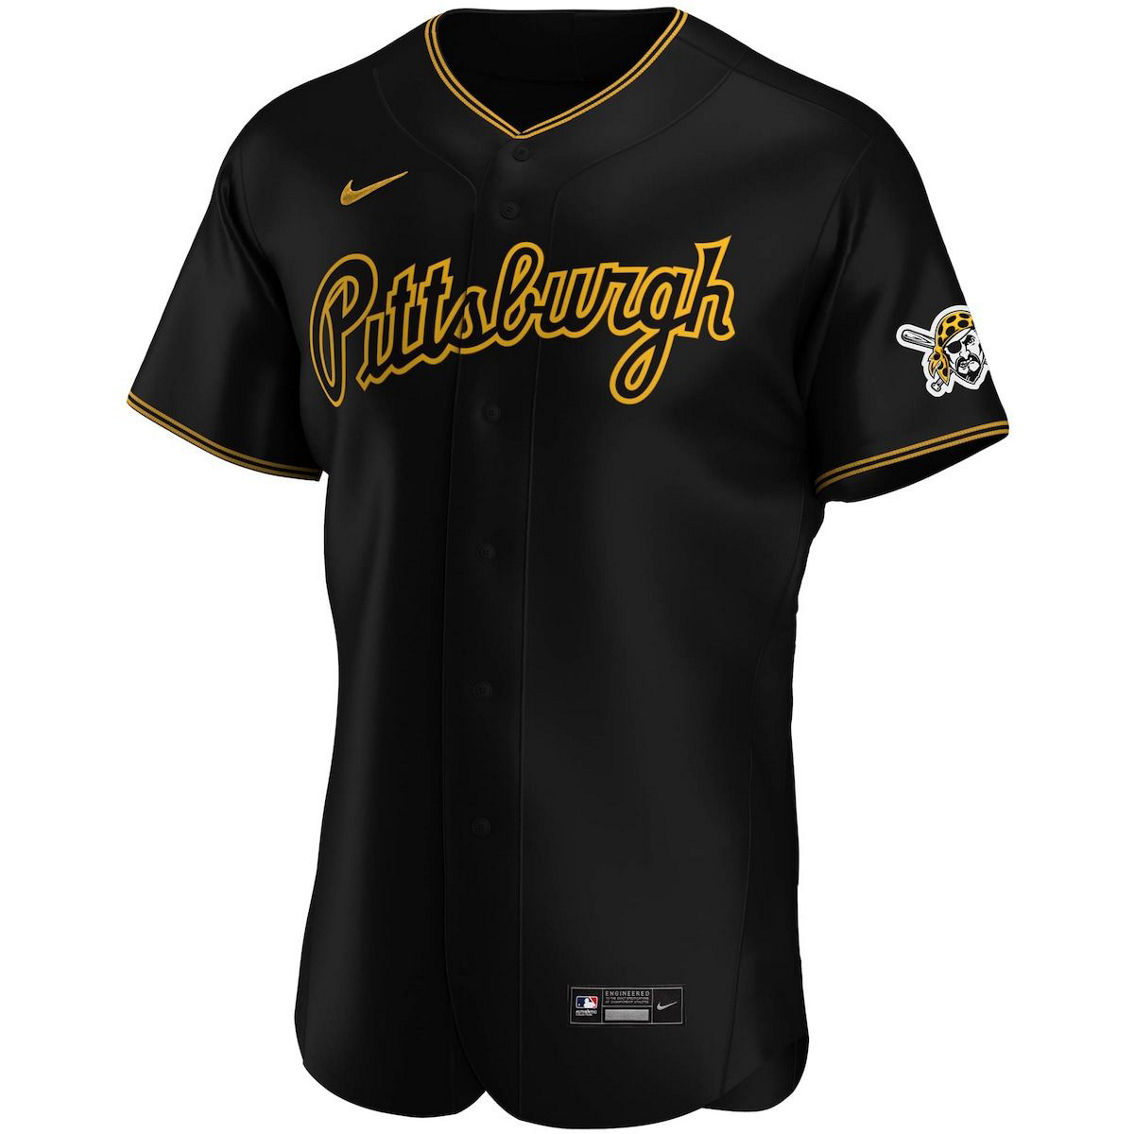 Nike Men's Black Pittsburgh Pirates Alternate Authentic Team Jersey - Image 3 of 4